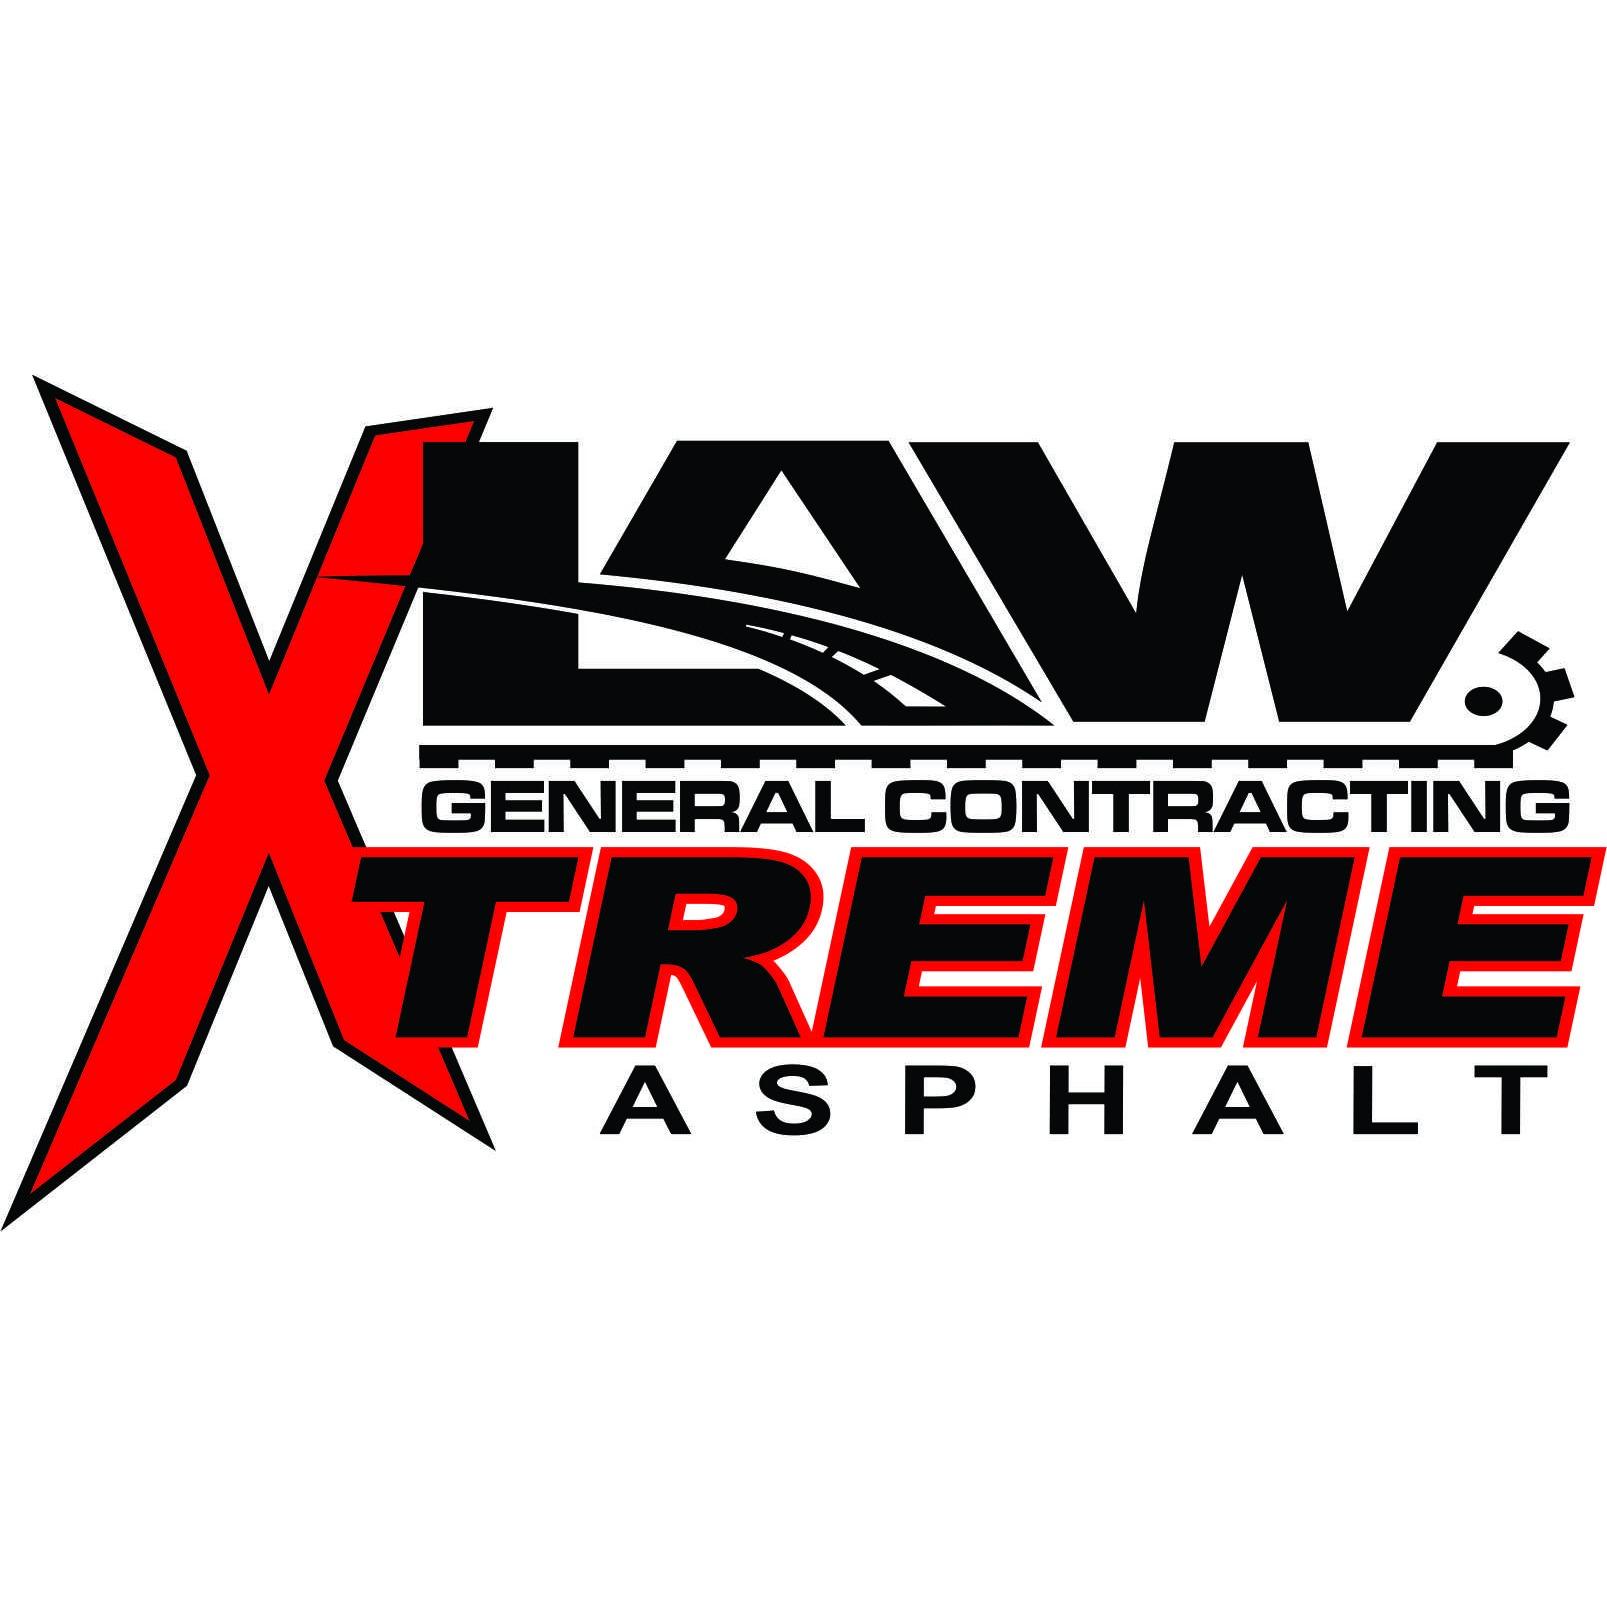 Xtreme Asphalt/Law General Contracting Logo